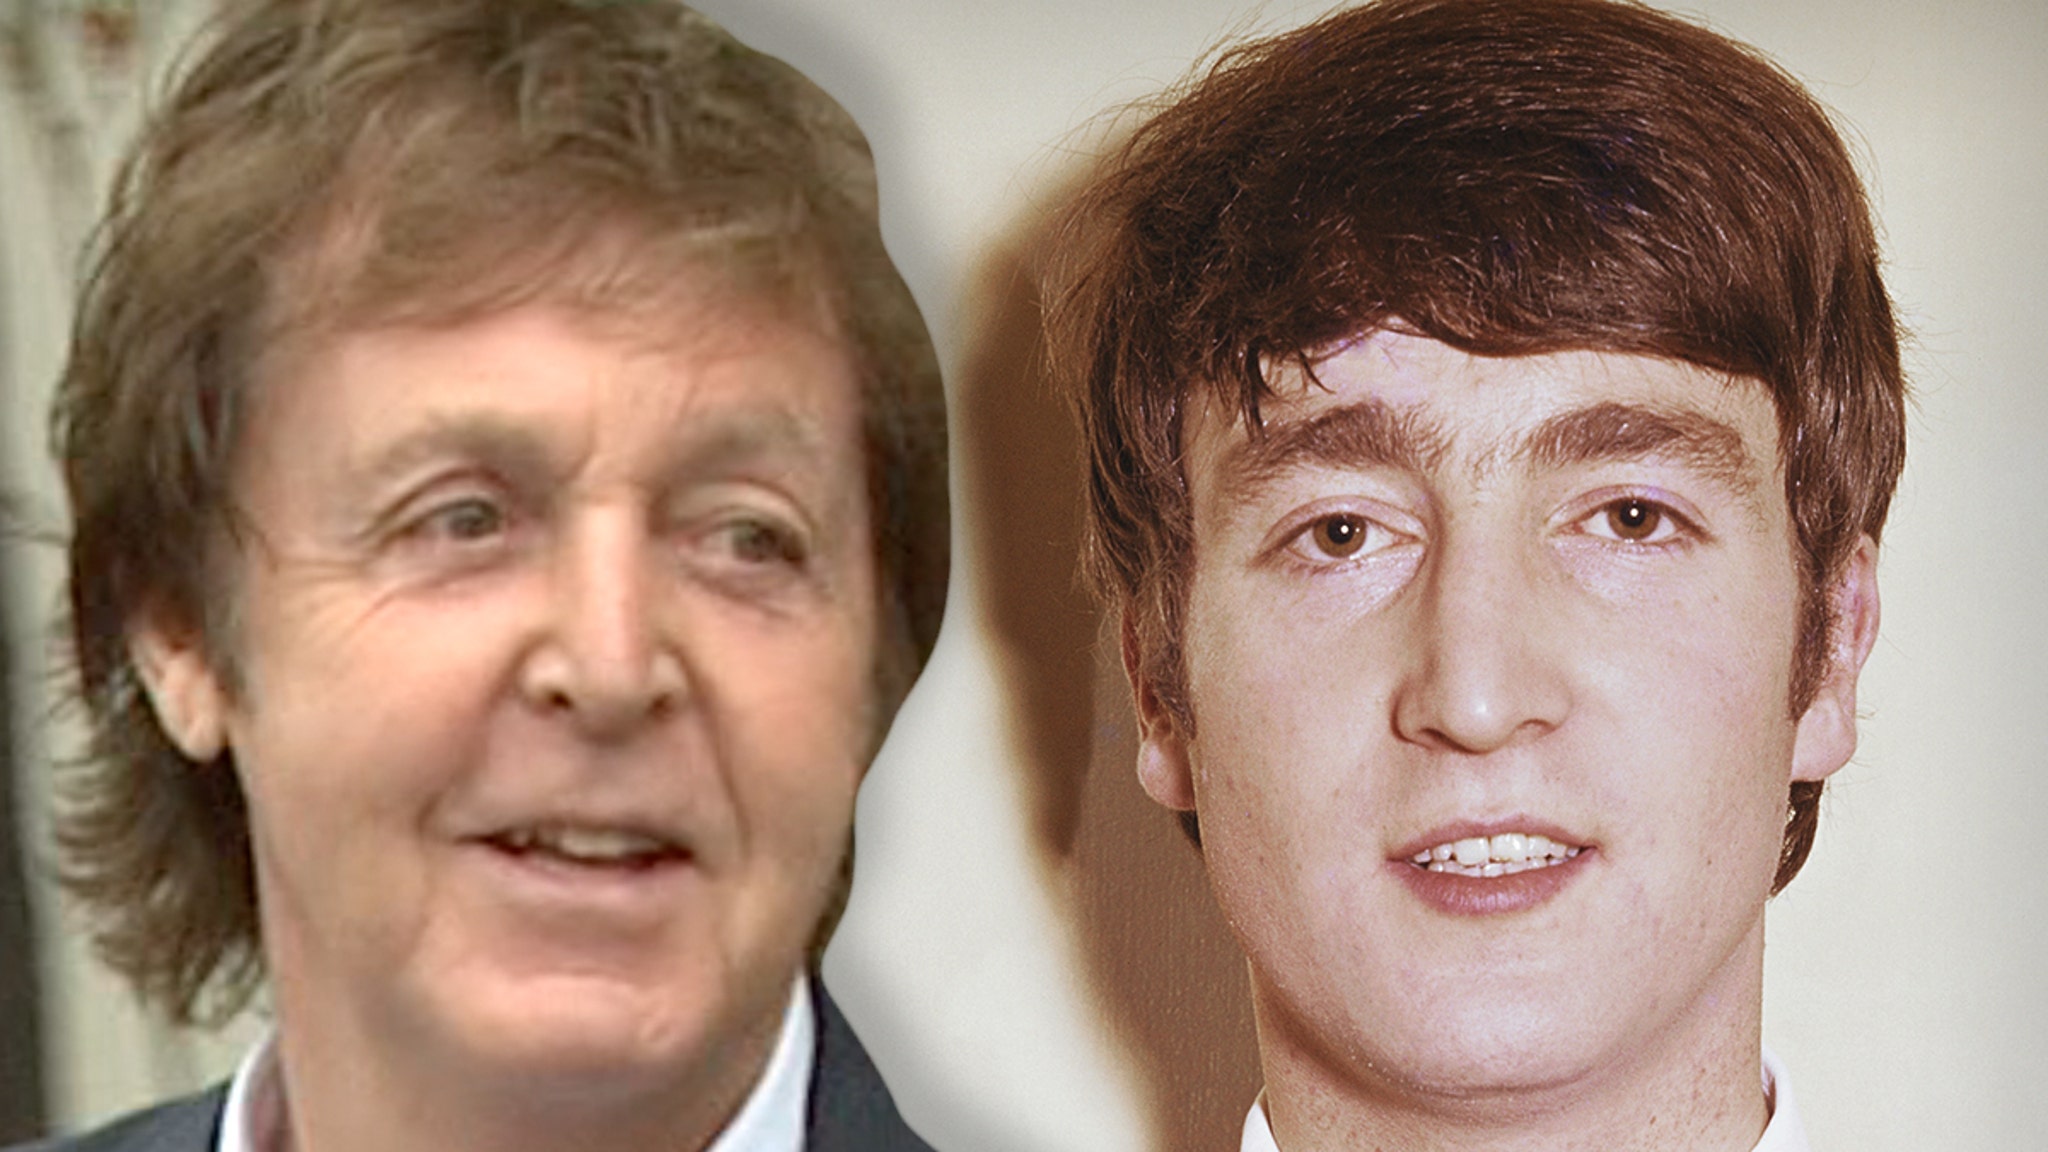 Paul McCartney performs virtual duet with John Lennon during WA concert